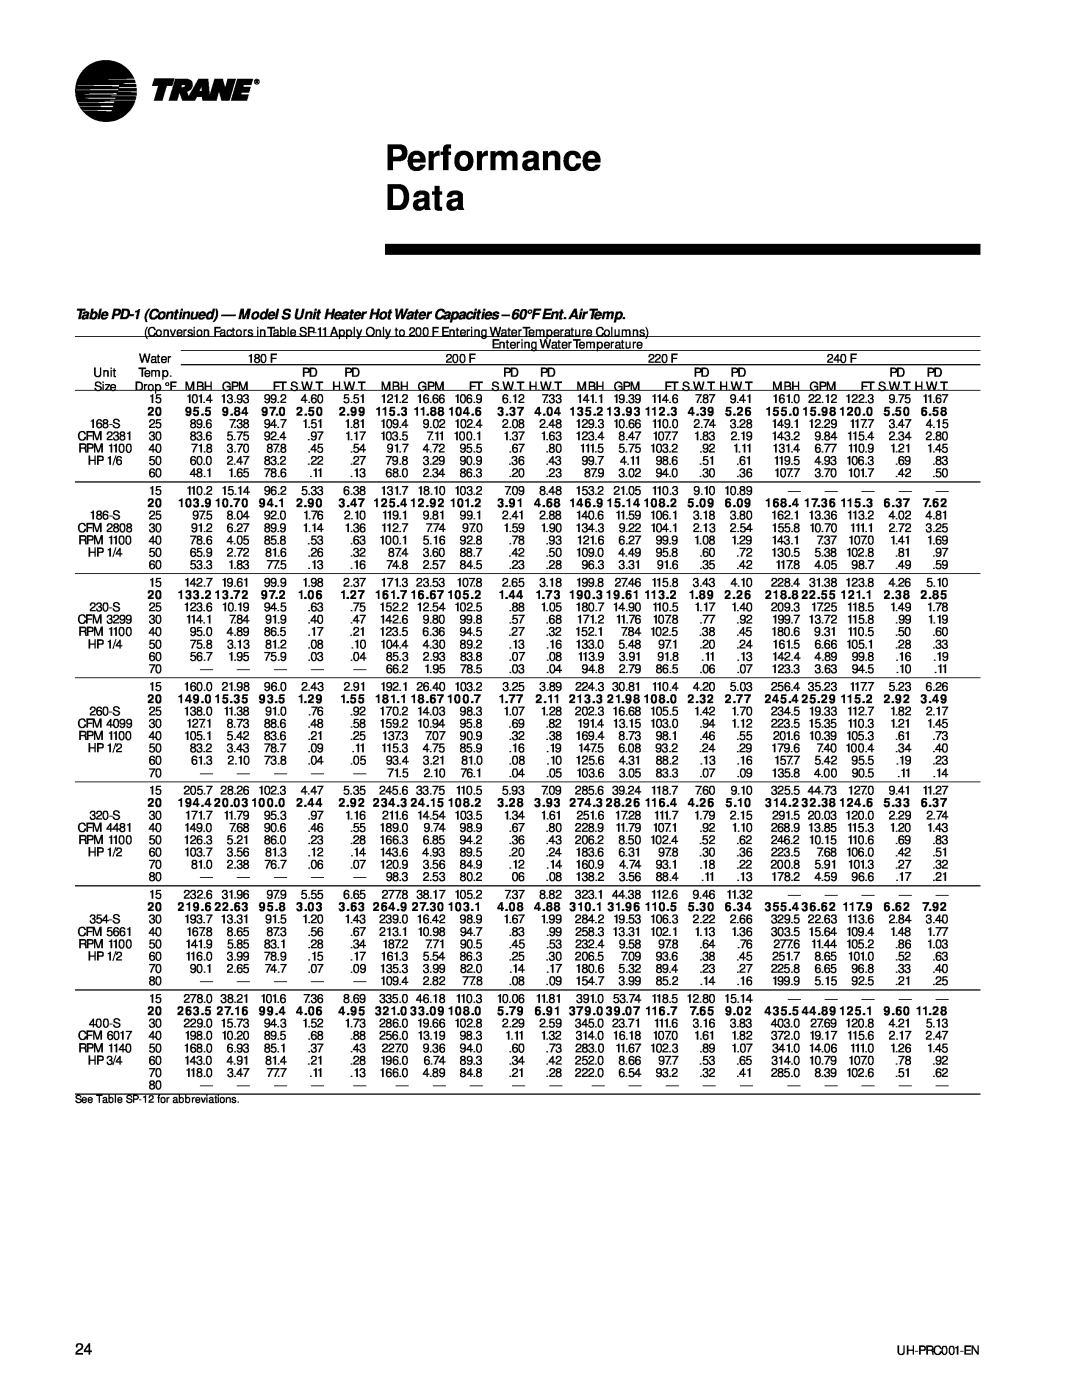 Trane UH-PRC001-EN manual Performance Data, Water 